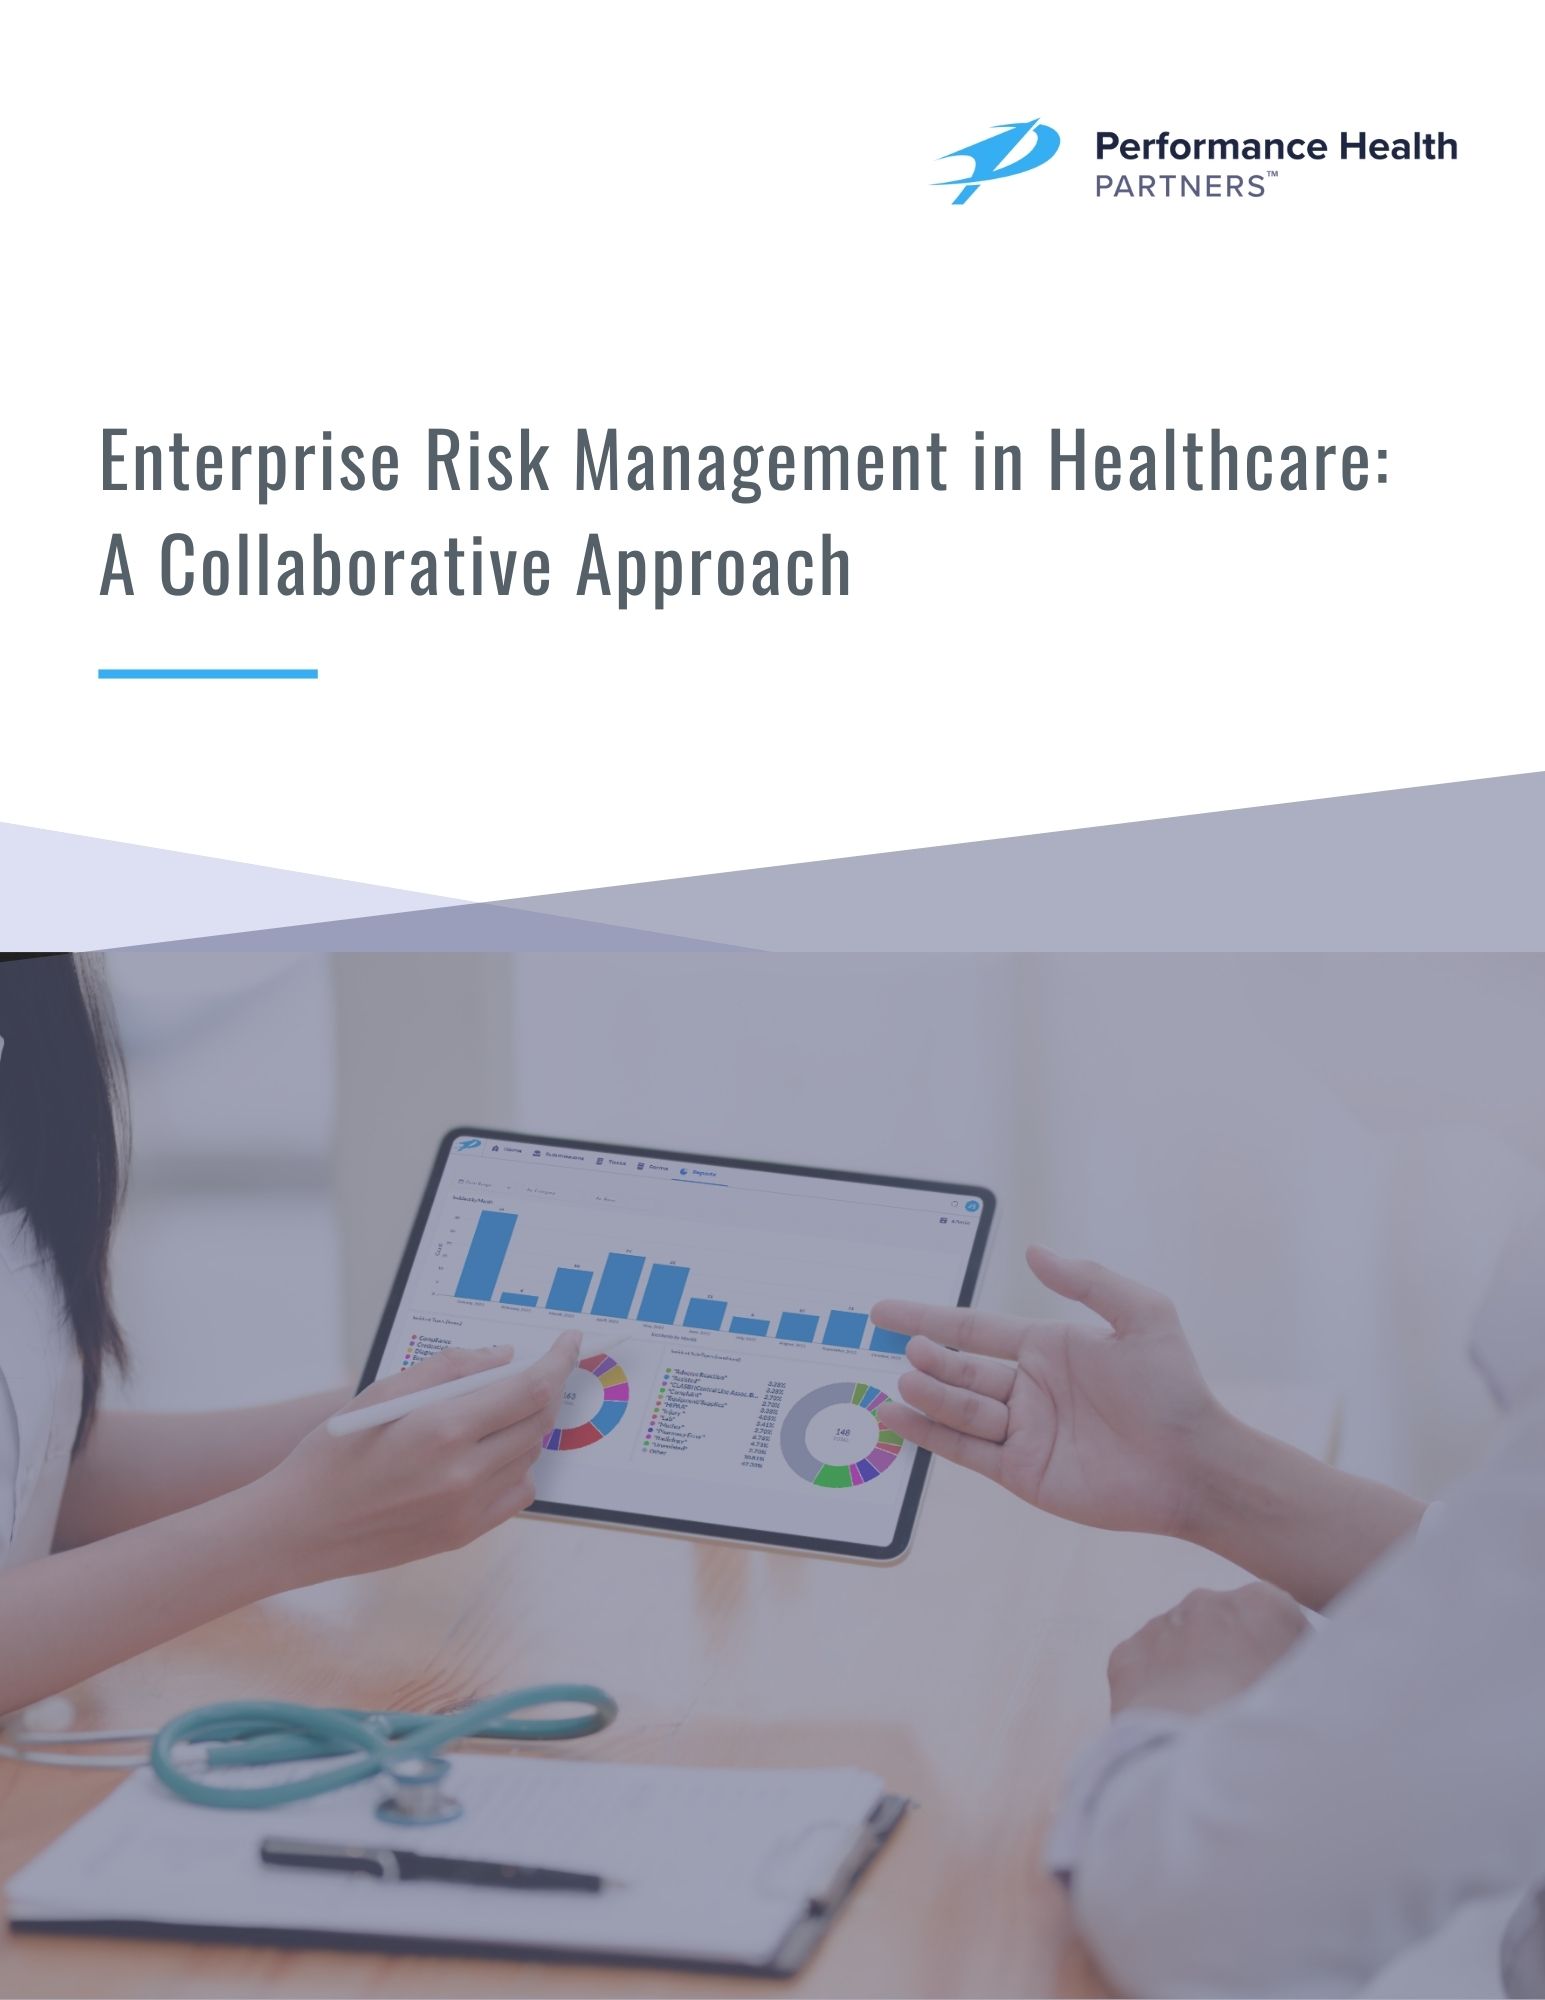 Enterprise Risk Management in Healthcare Whitepaper